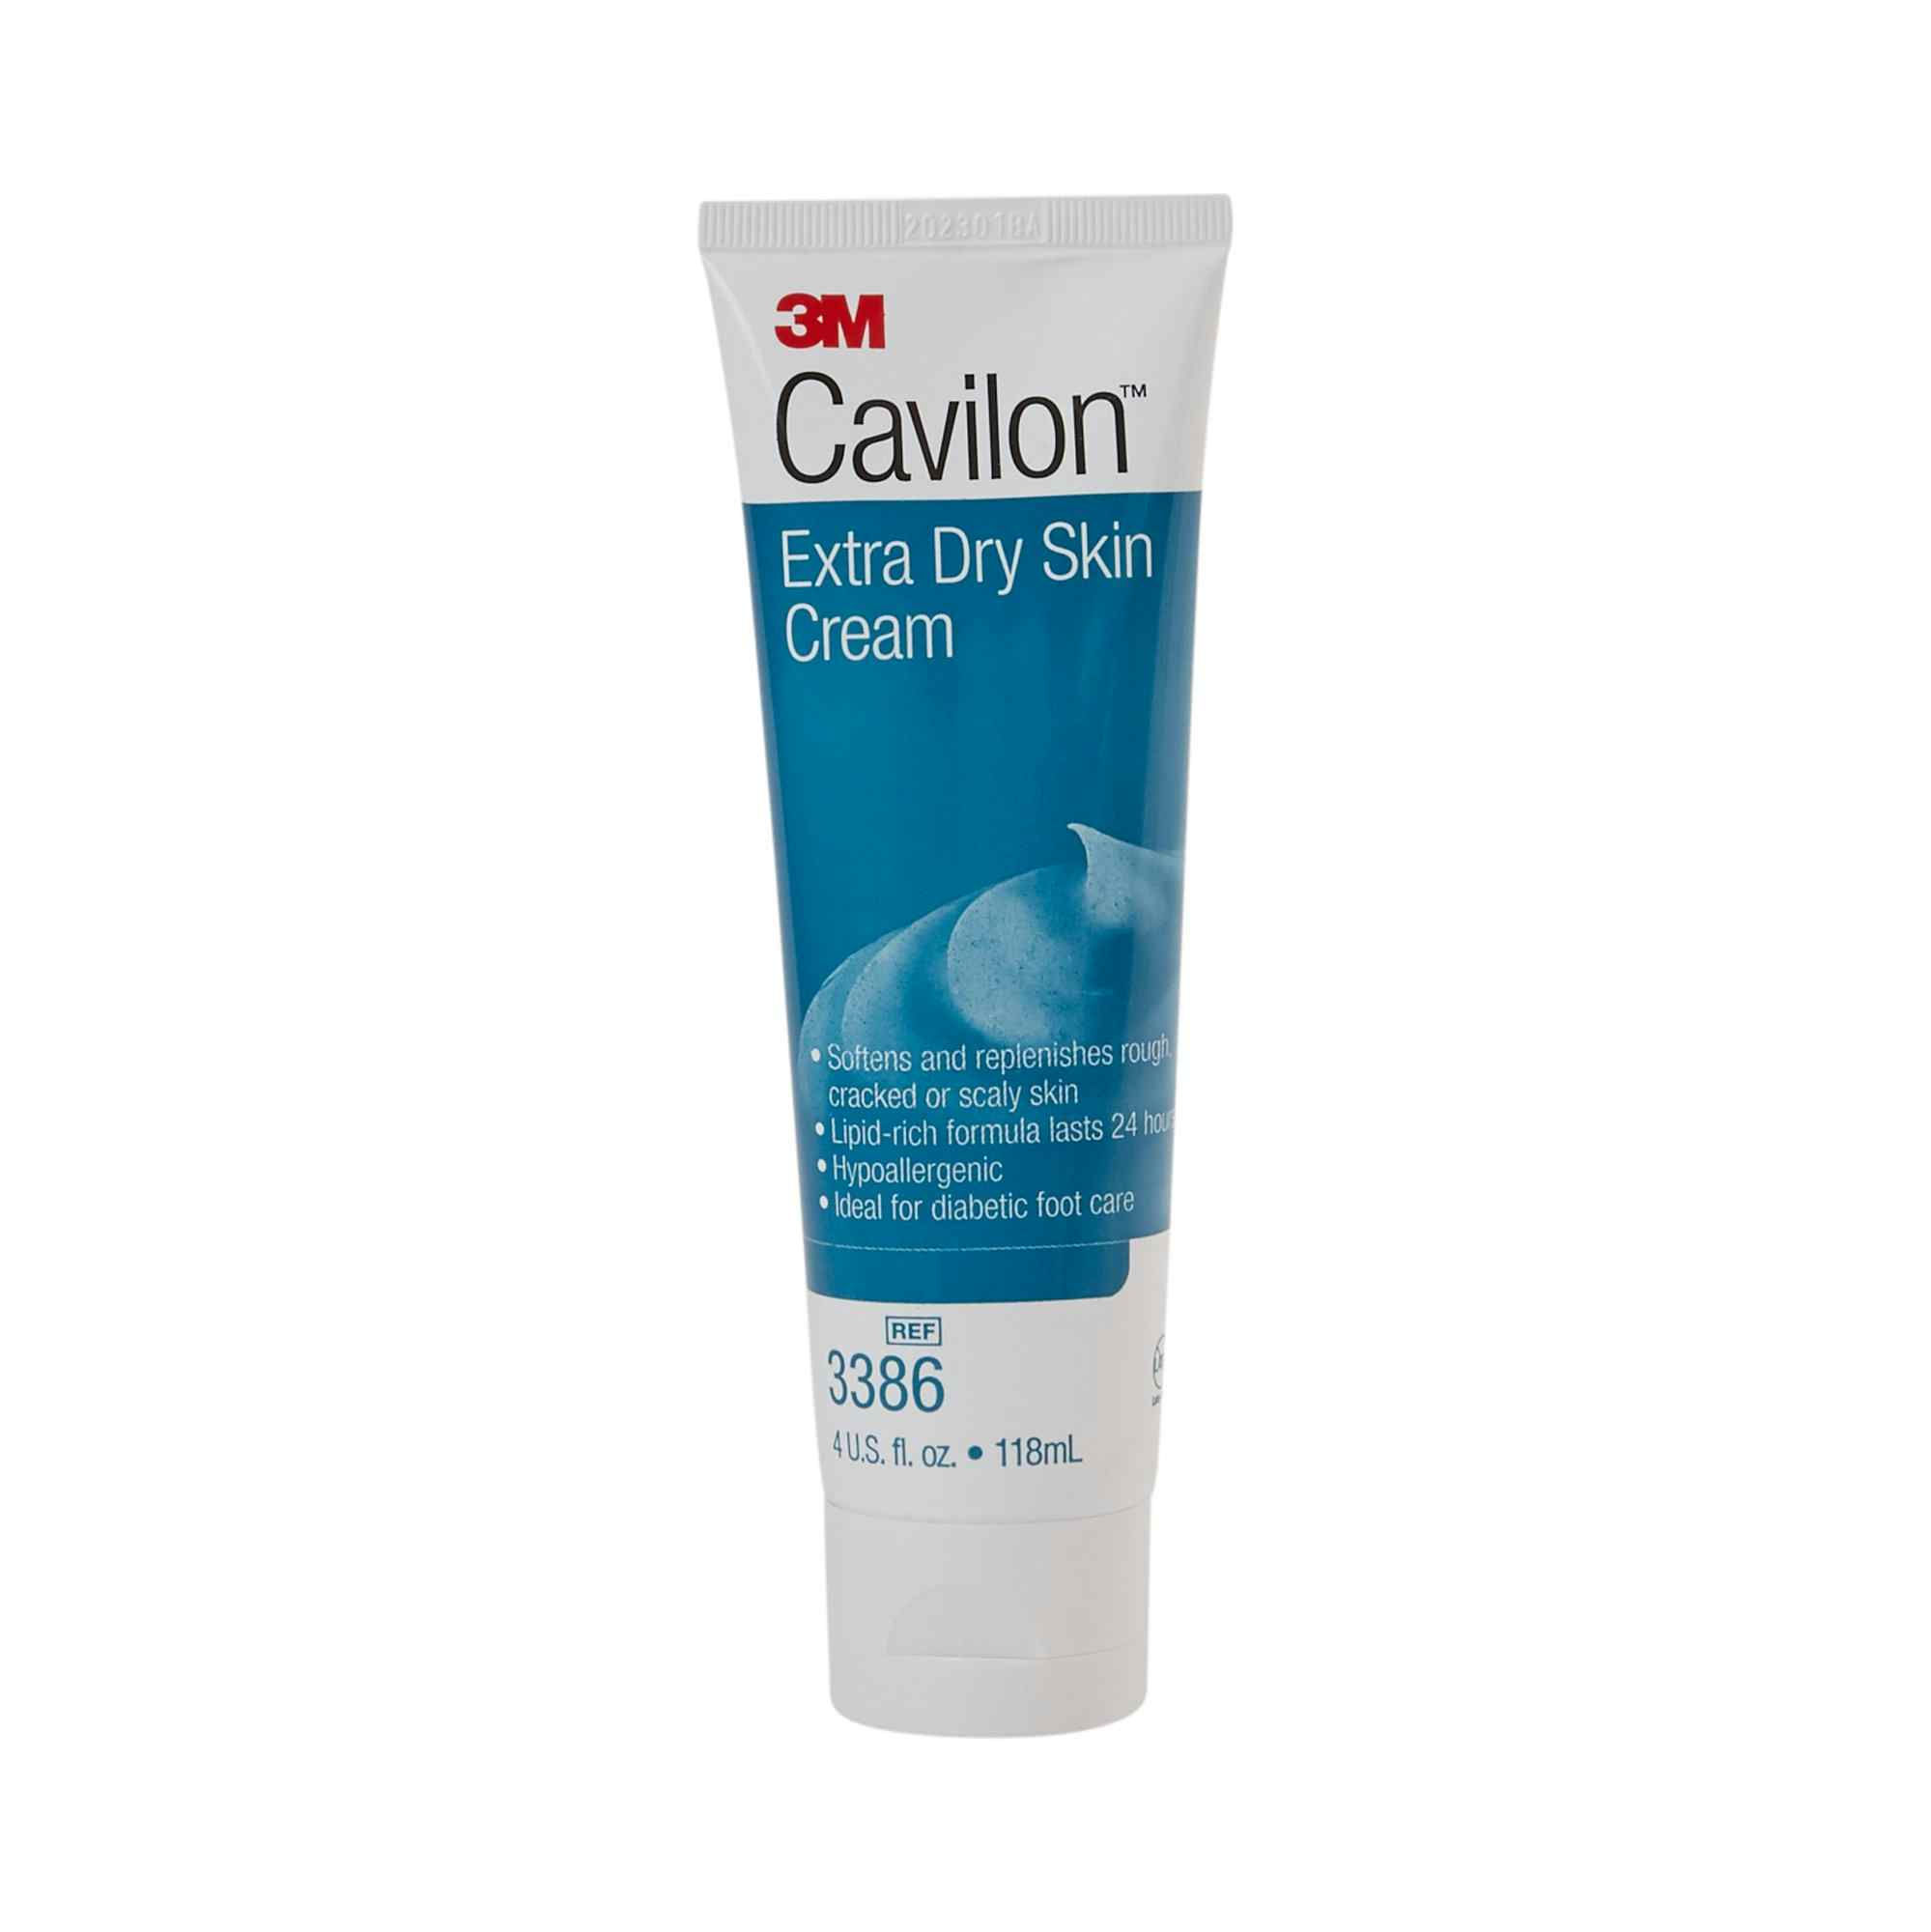 3M Cavilon Extra Dry Skin Cream, 4 oz.